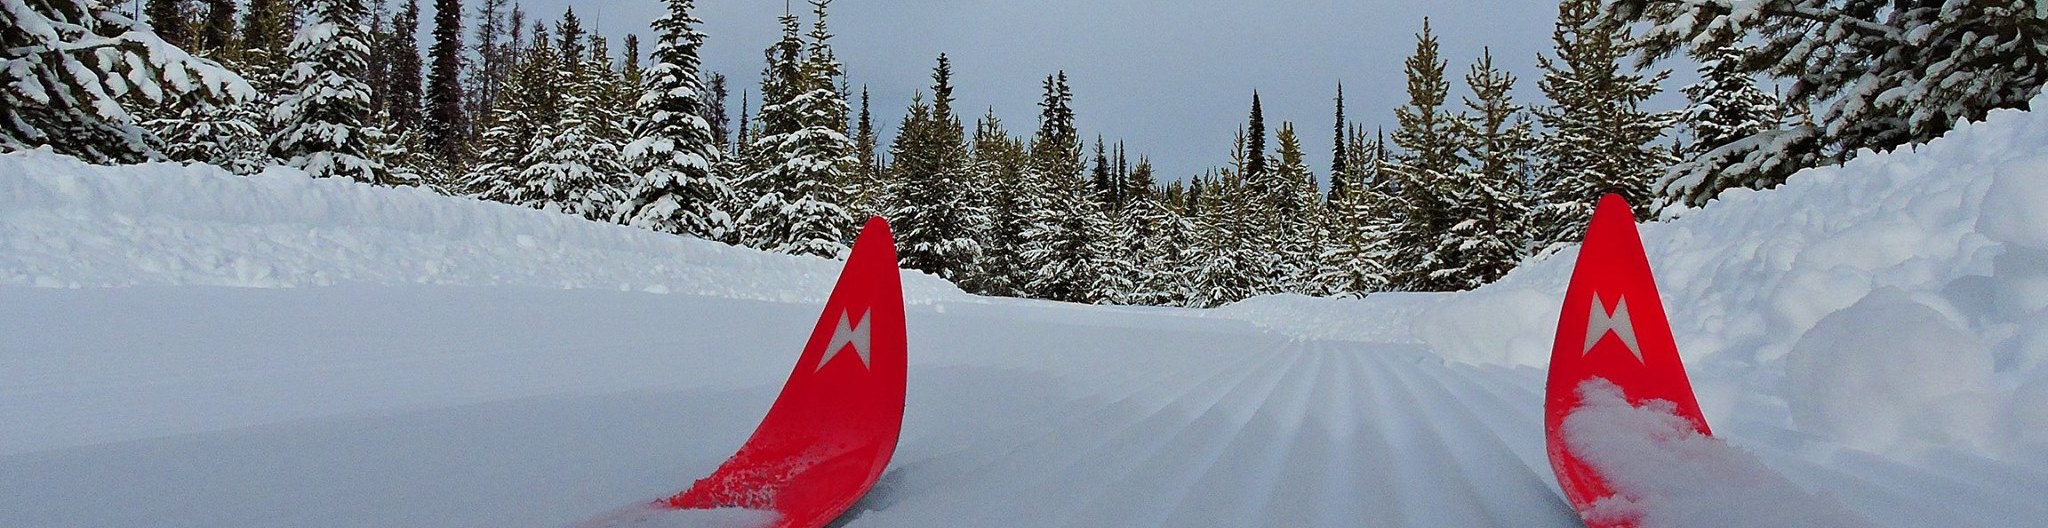 banner image - skis on groomed trail